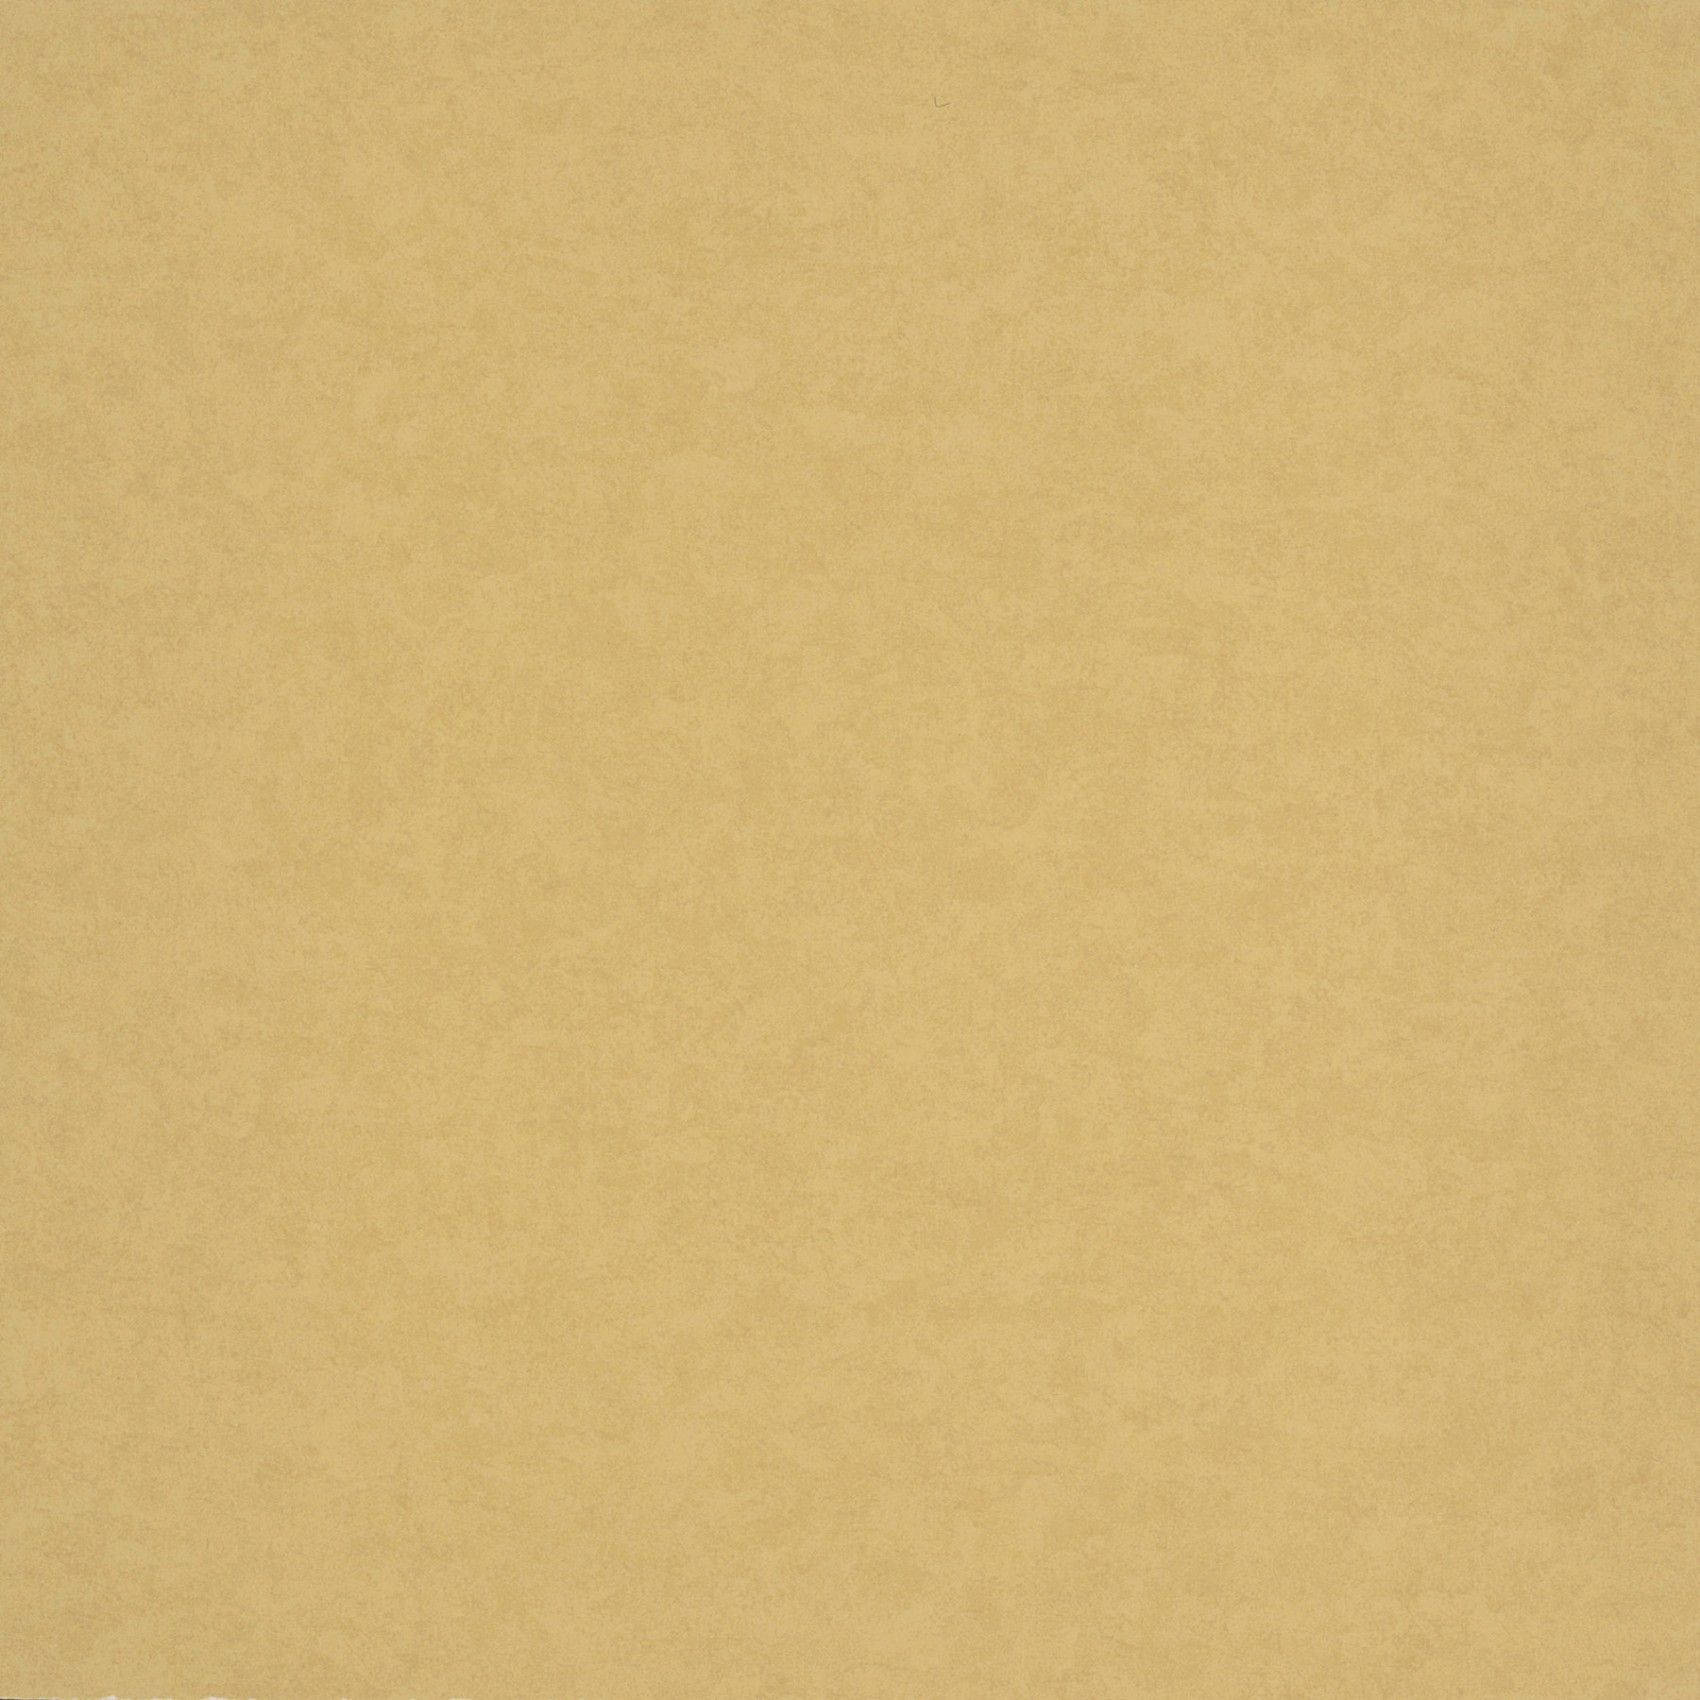 Natural, Brown Kraft Paper Texture Background